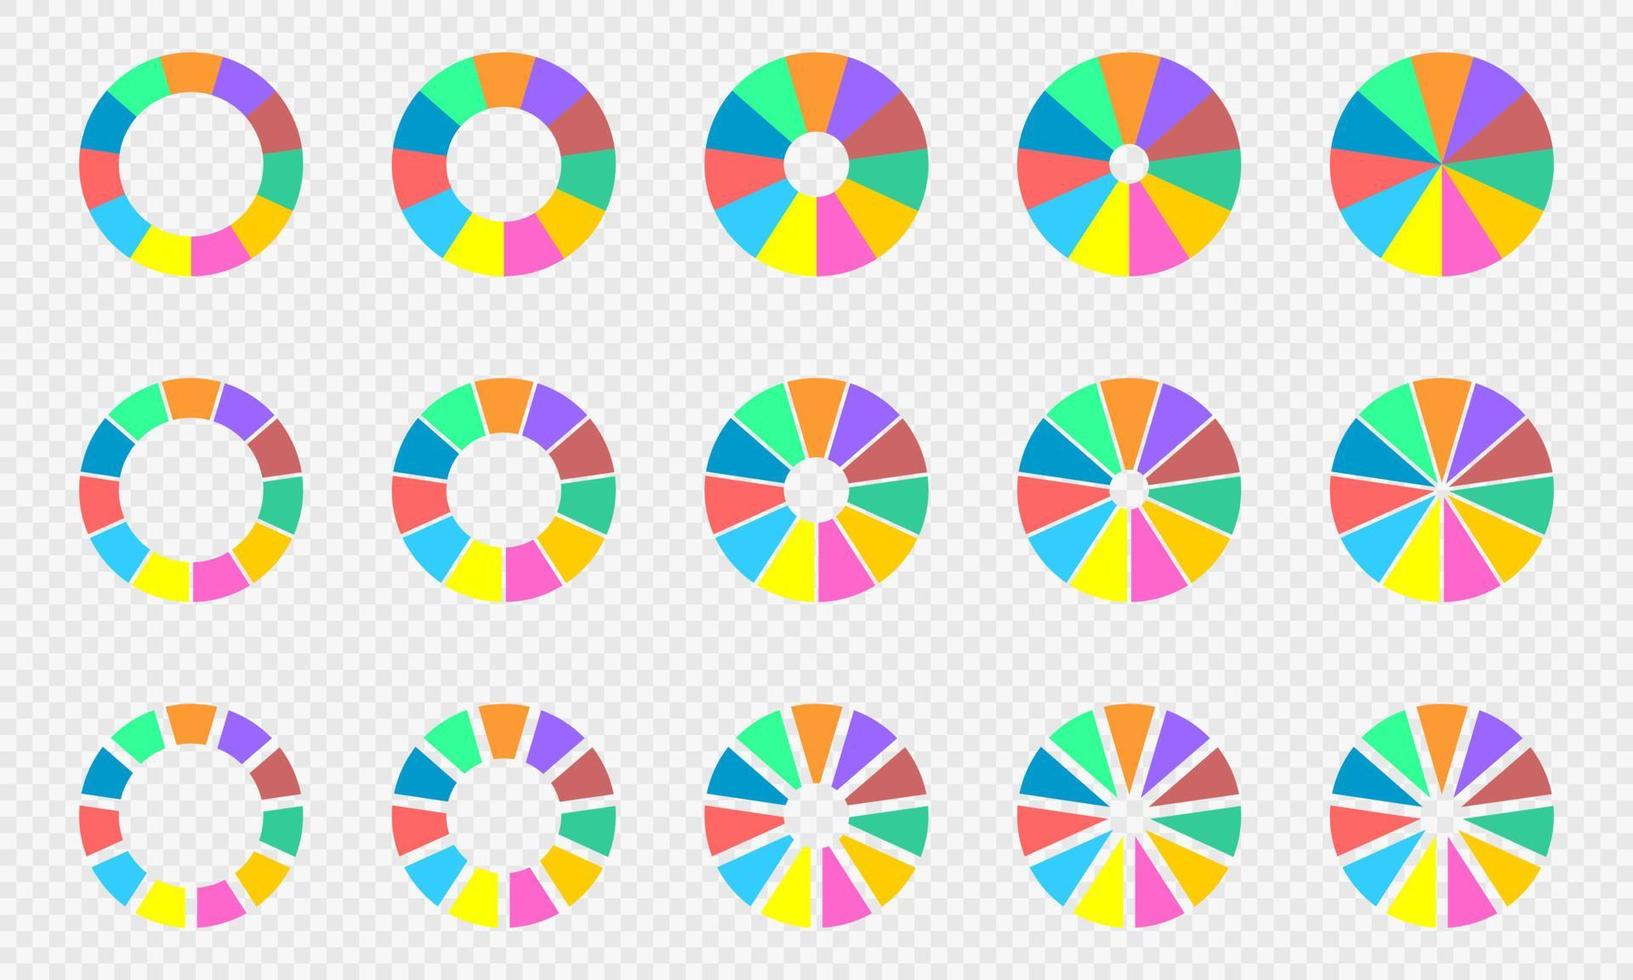 torta e rosquinha gráficos definir. colorida círculo diagramas dividido dentro 11 Seções. infográfico rodas. volta formas cortar dentro onze igual partes vetor